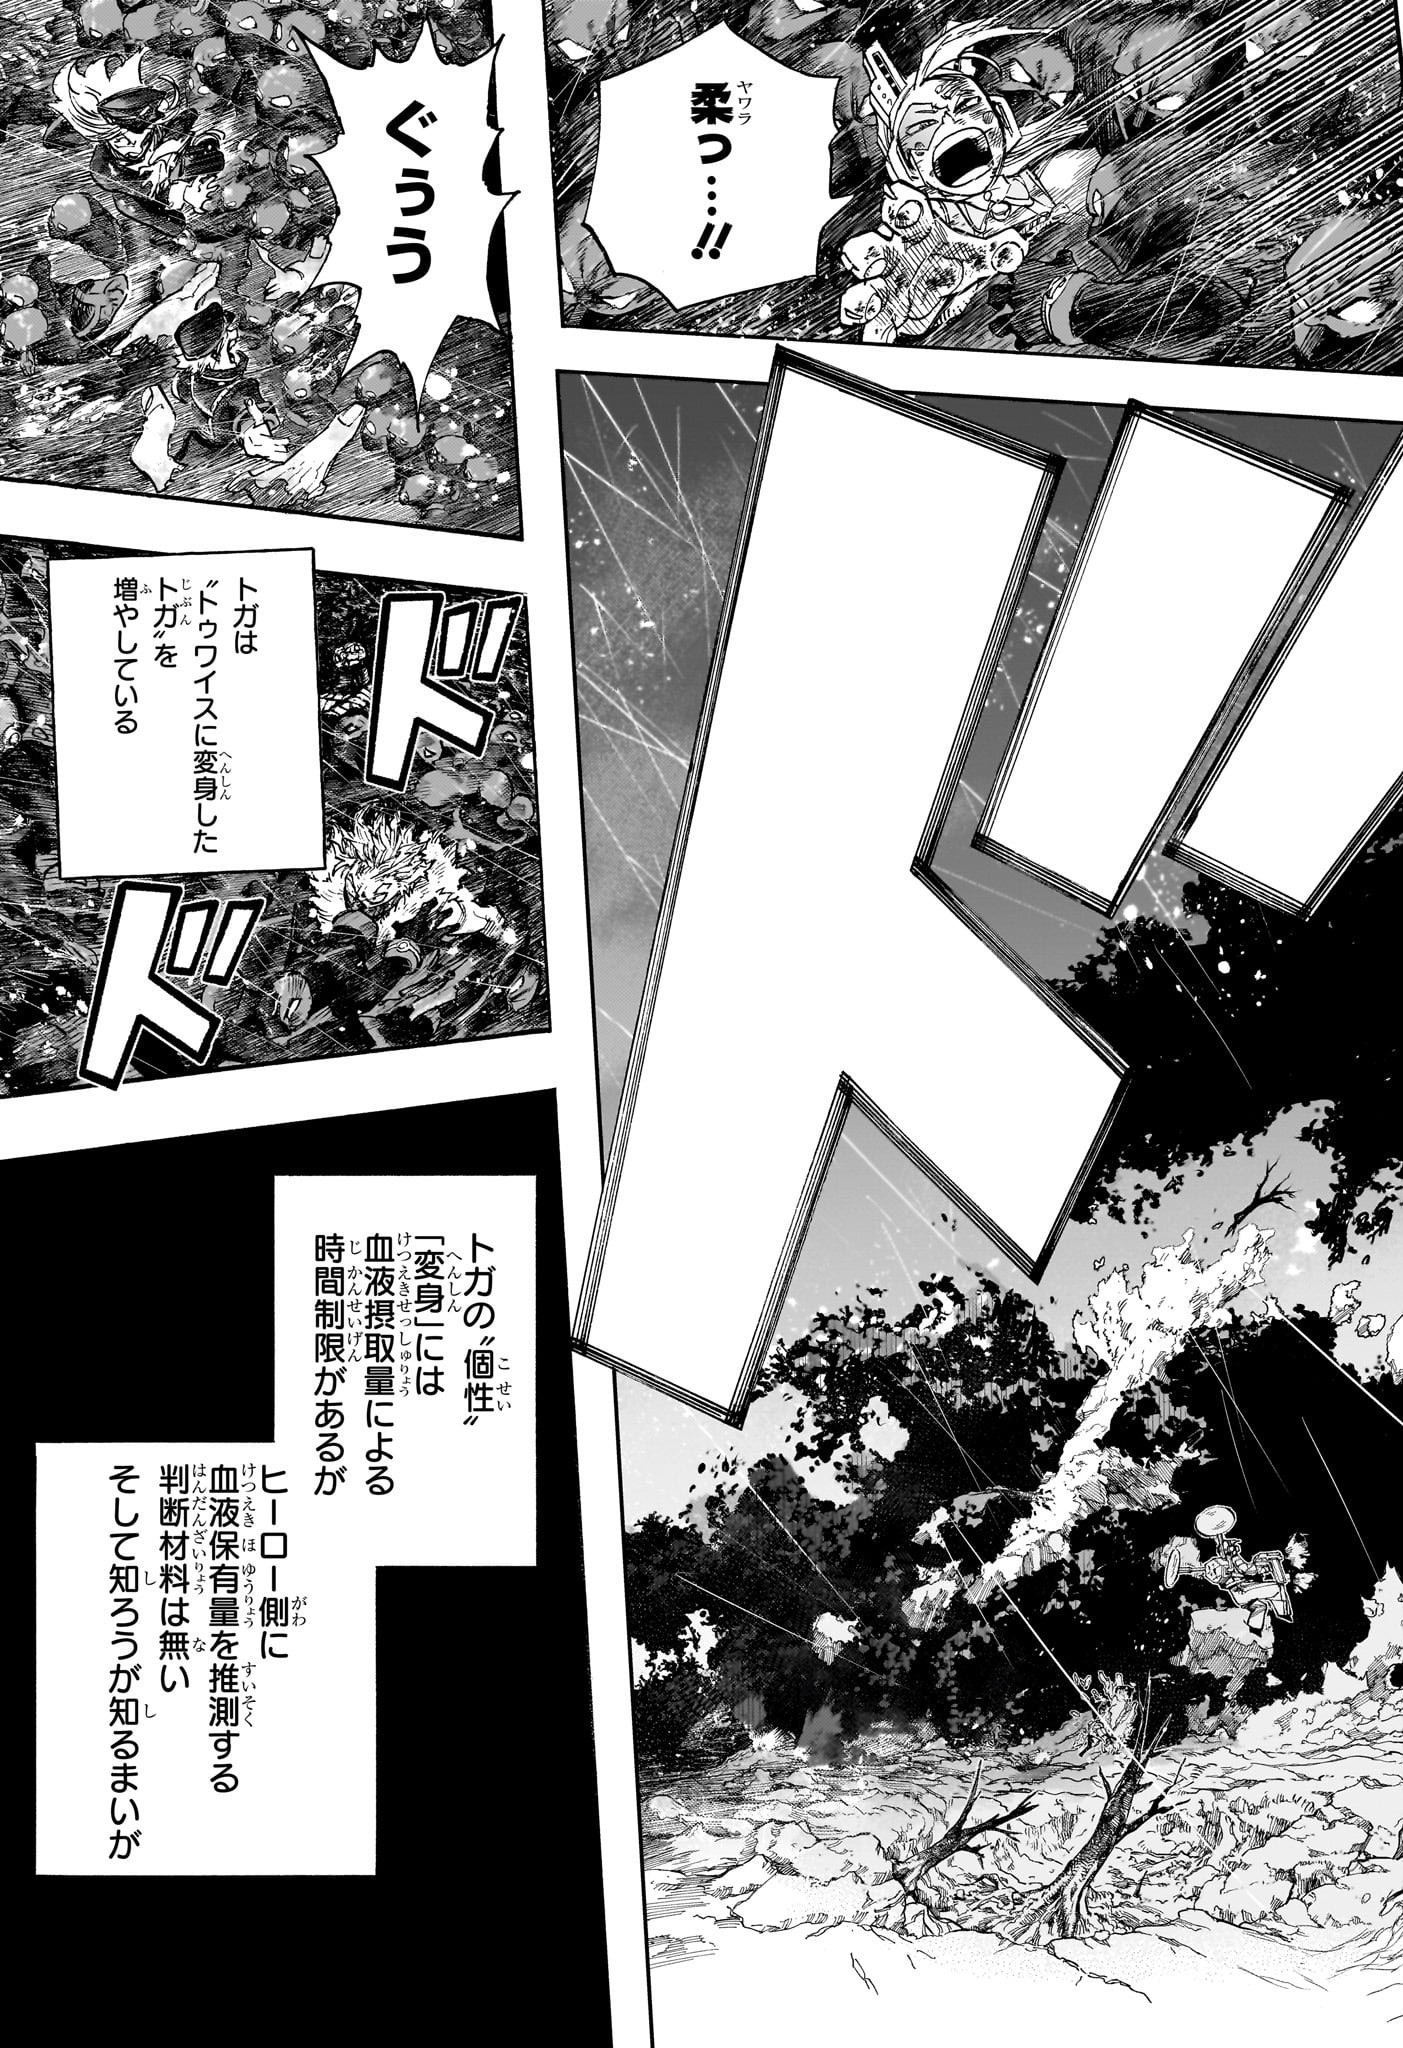 Boku no Hero Academia - Chapter 391 - Page 3